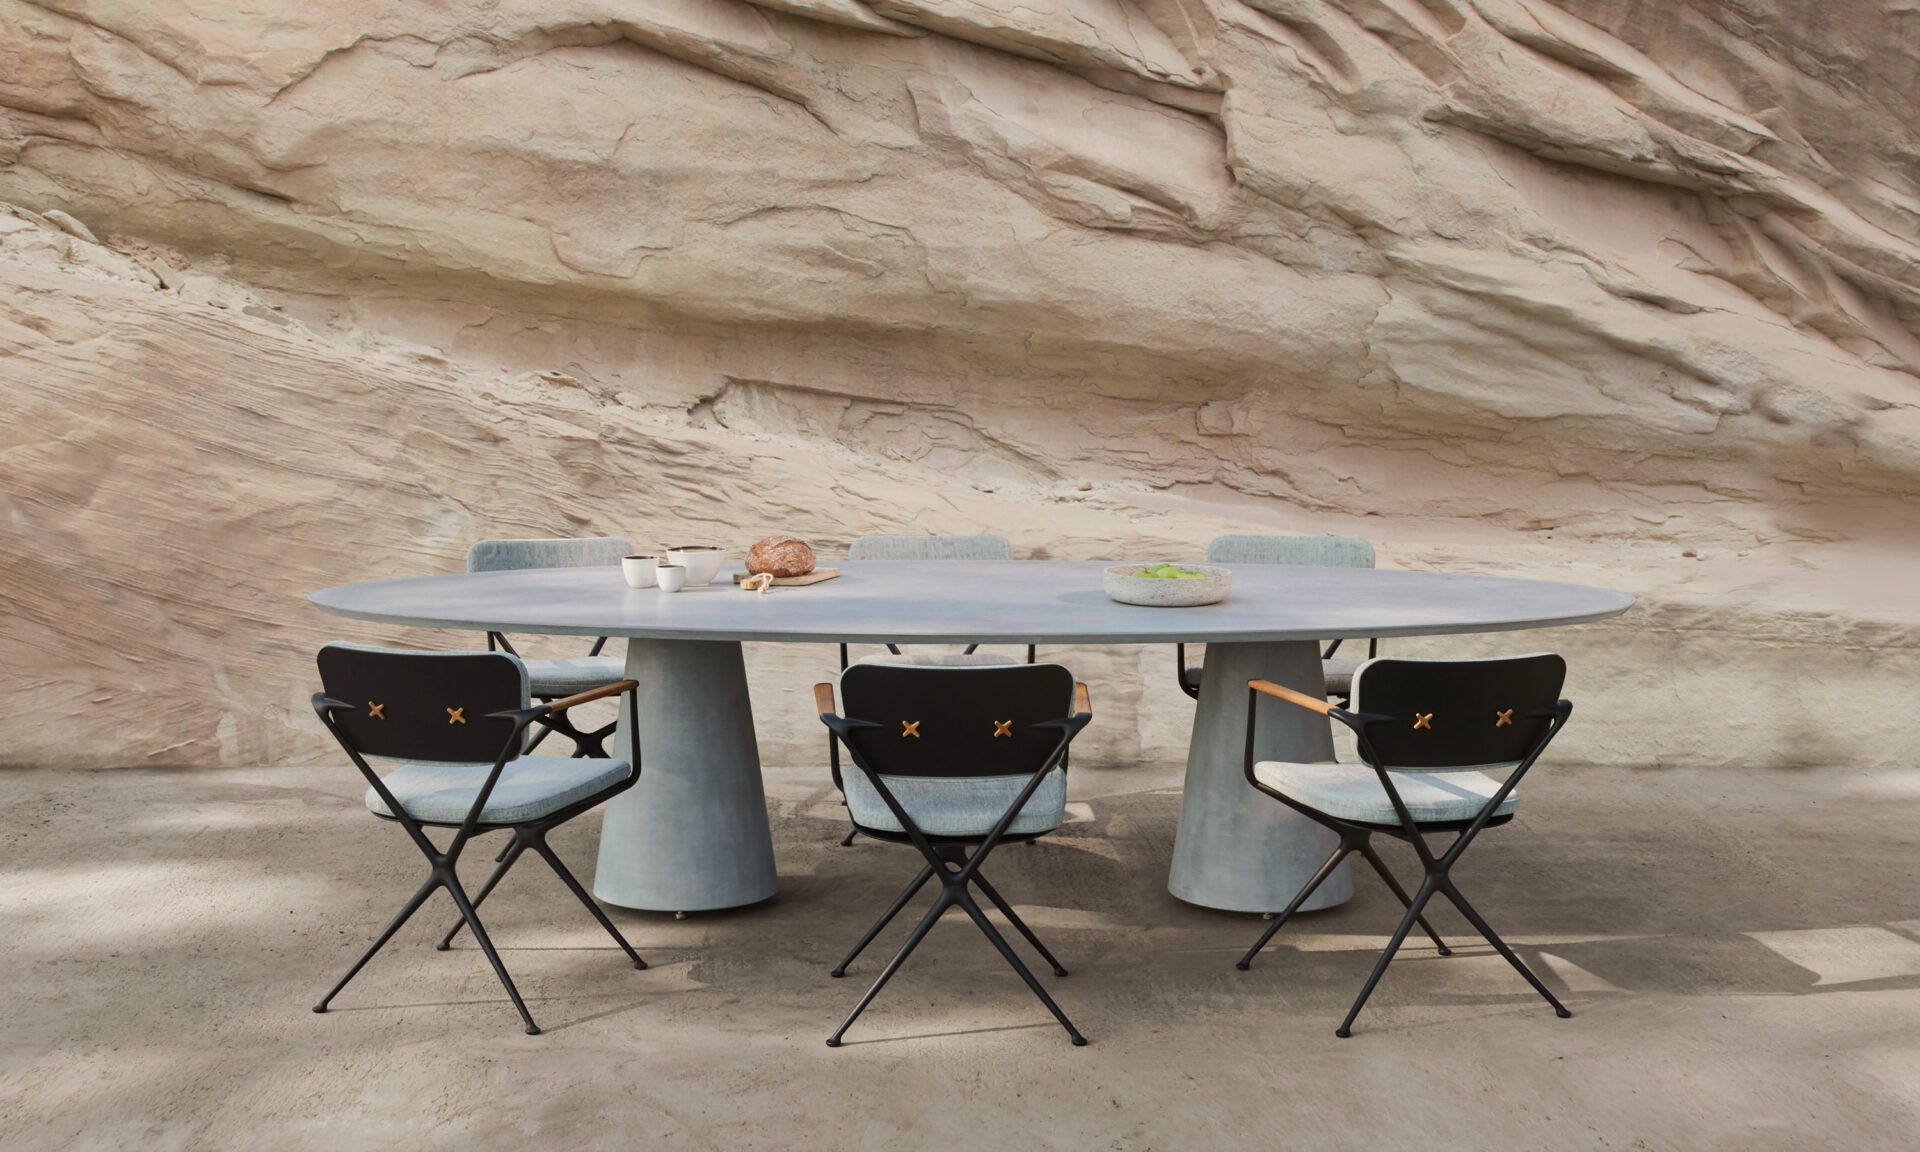 Exes Table 220x120cm Alu Legs Sand - Table Top Ceramic Cemento Luminoso